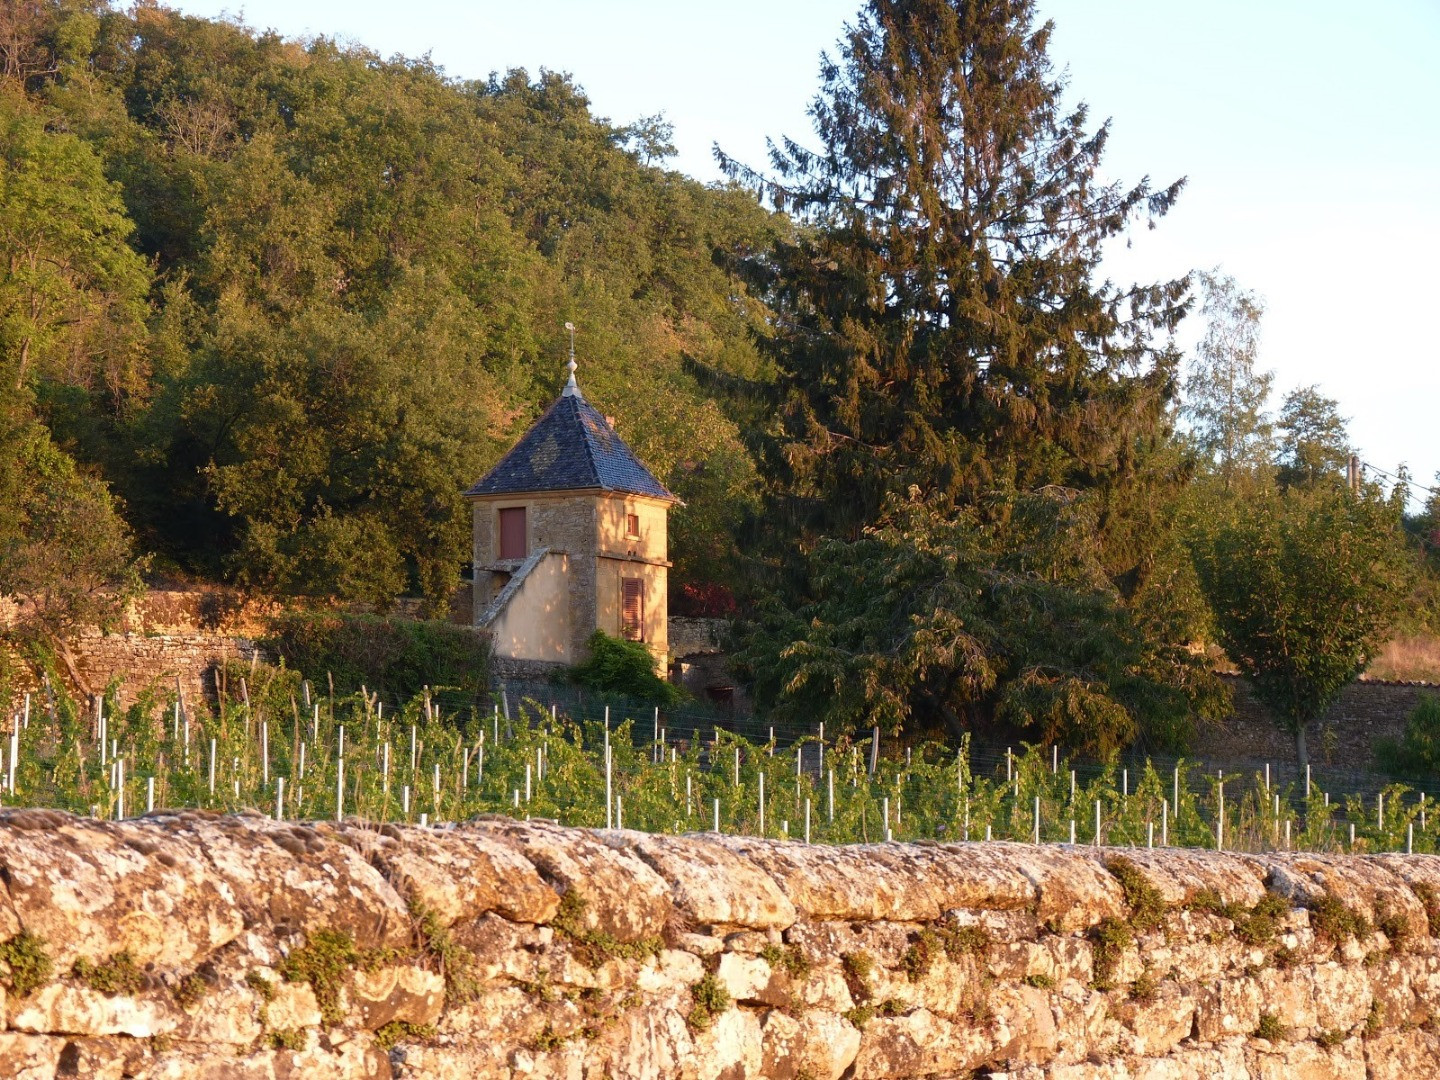 The Clos de Rochebonne (Theizé) planted with Chardonnay 